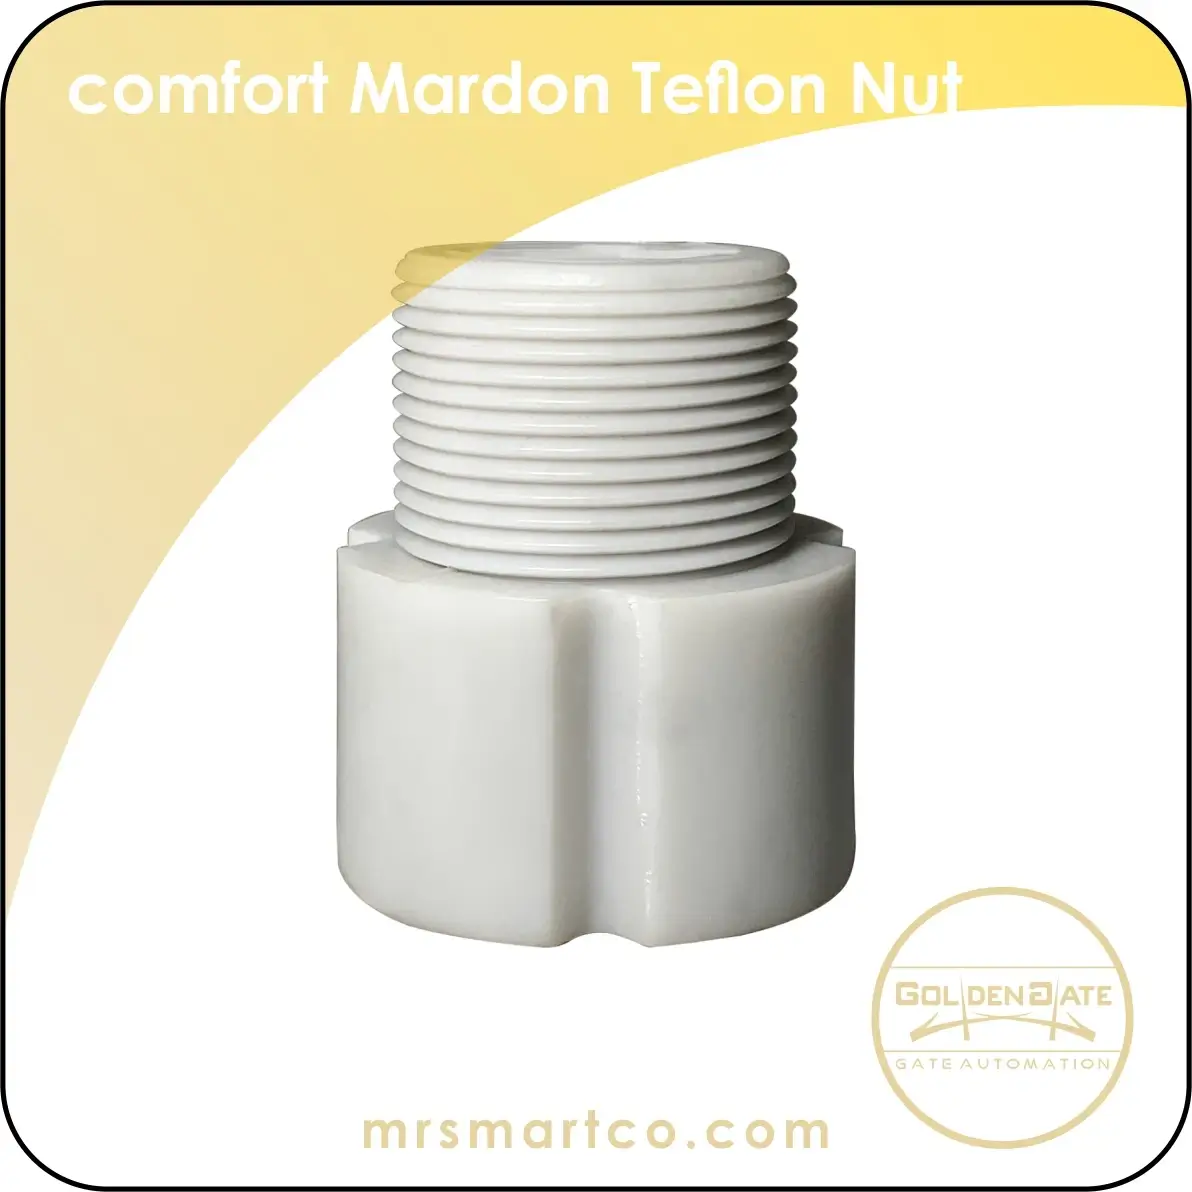 comfort Mardun Teflon nut